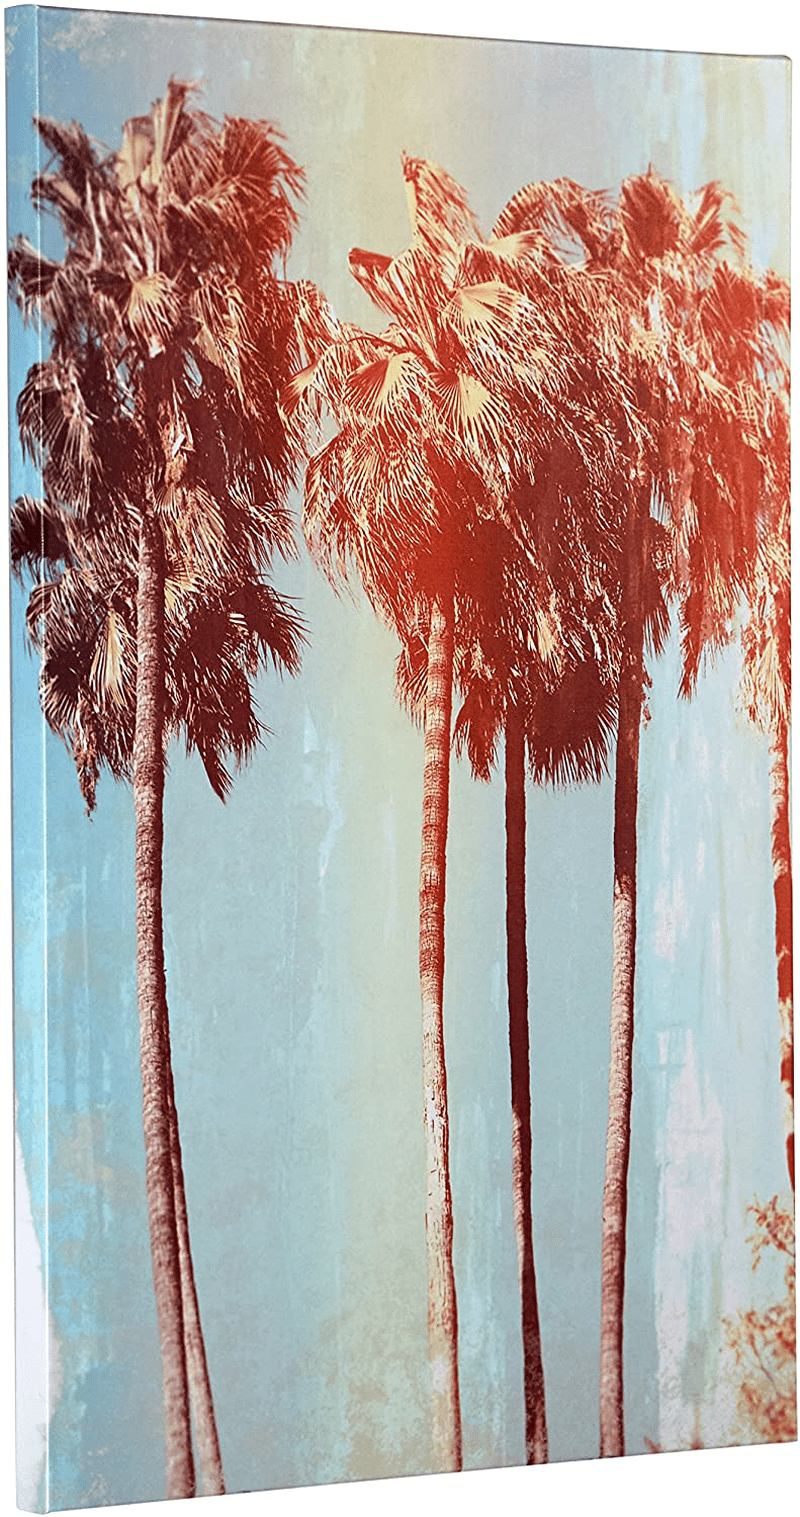 Amazon Brand – Rivet Vintage-Look Turquoise and Sepia Palm Tree Print, 10"x15" Home & Garden > Decor > Artwork > Posters, Prints, & Visual Artwork Rivet   